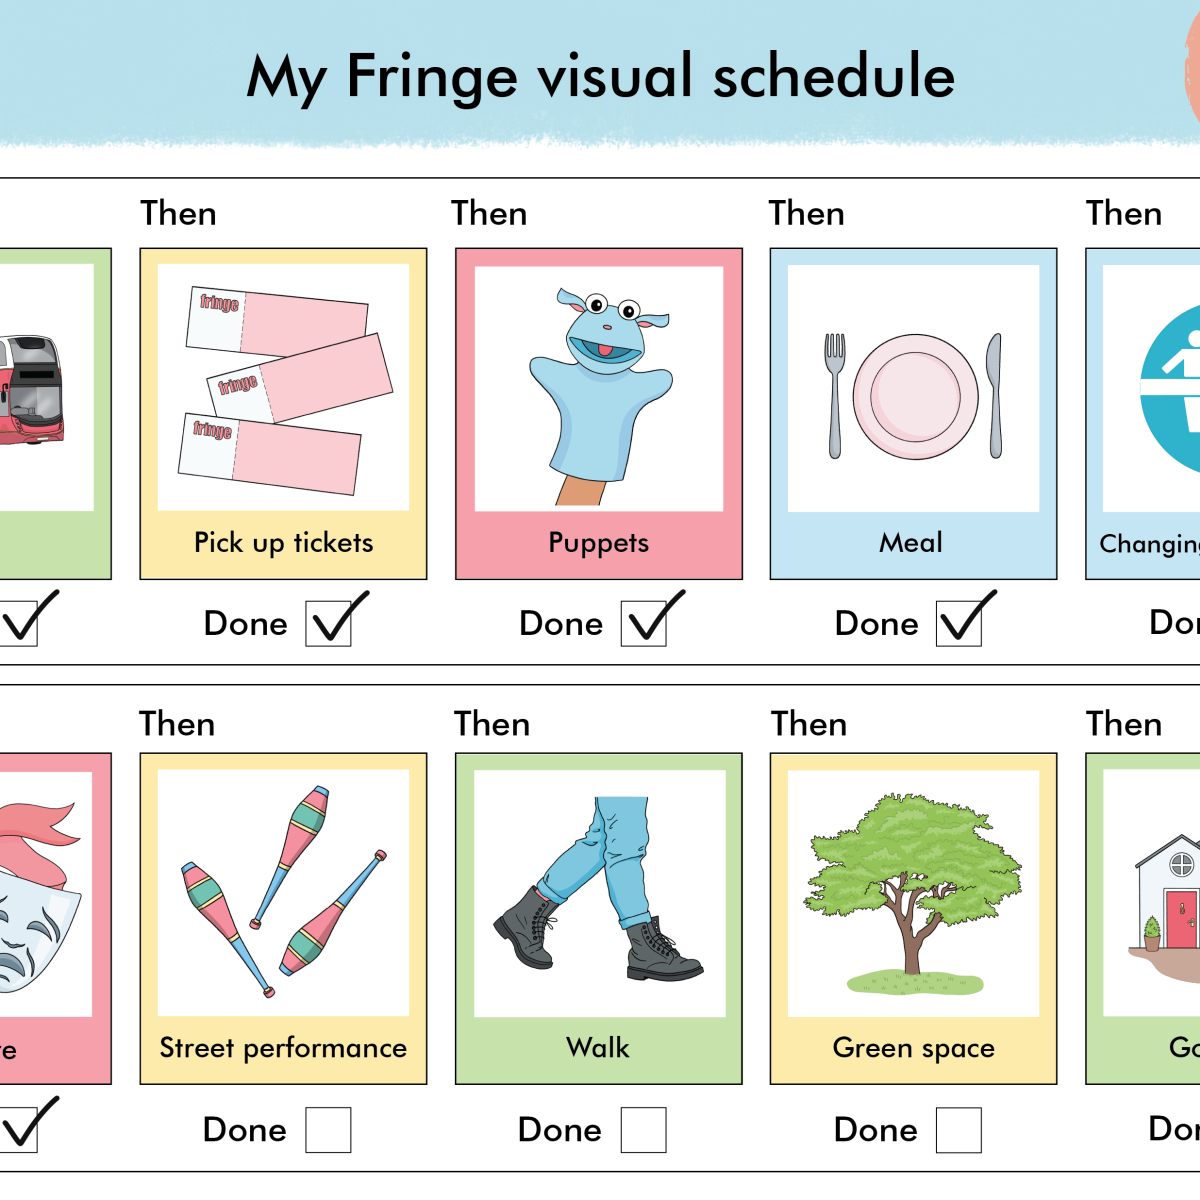 SWAN volunteer creates visual schedule for the Edinburgh Fringe Cover image